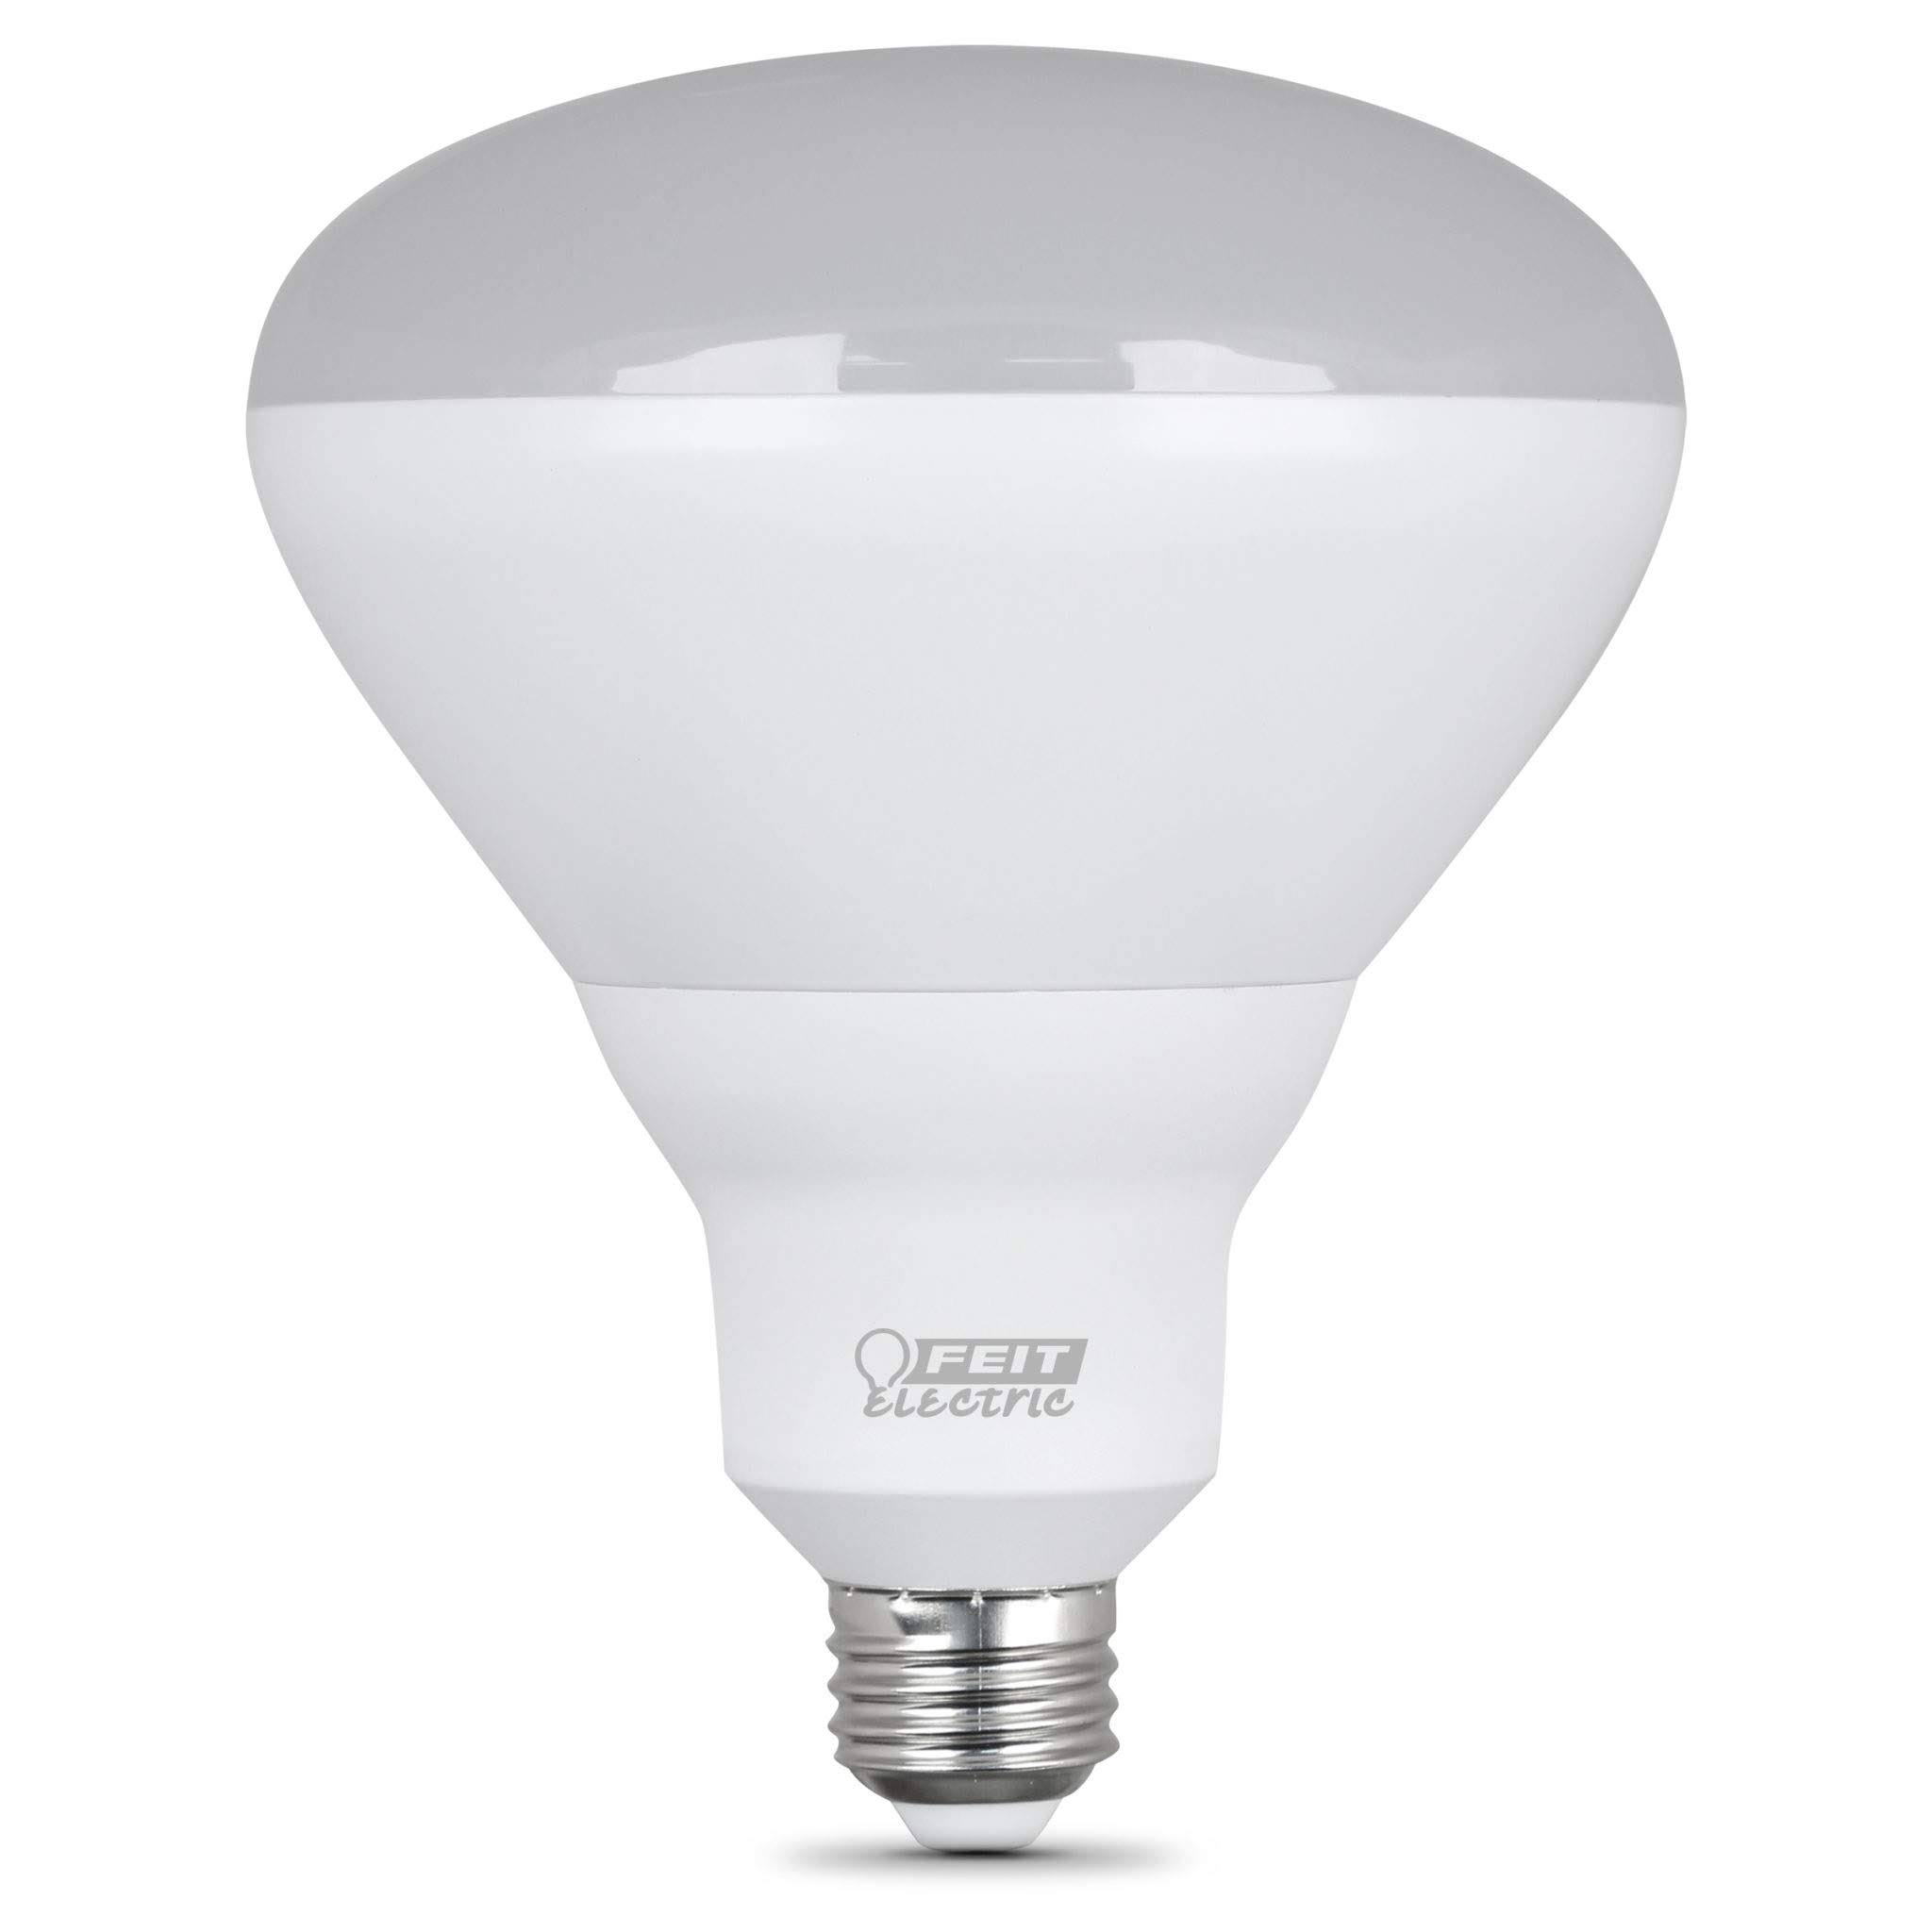 Feit Electric BR40 LED Bulb - Soft White, 15.5 W